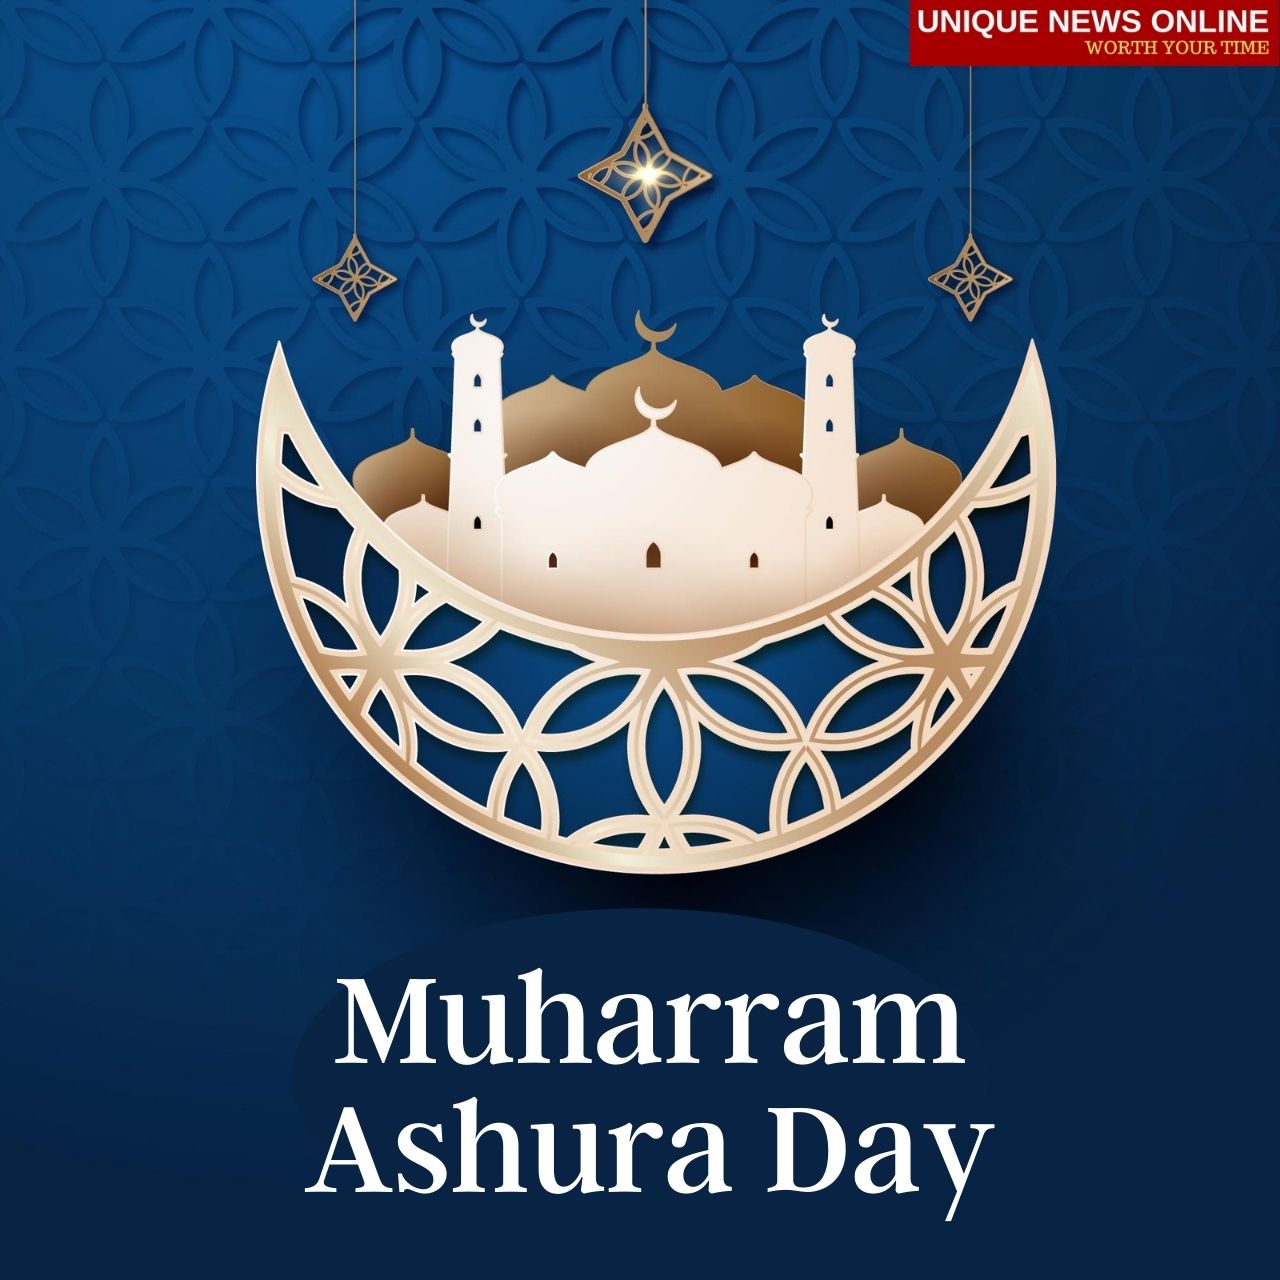 Muharram Ashura Day 2021 Dua, Quotes, Slogans, Status, DP, and HD Images to greet anyone on Youm-e-Ashura